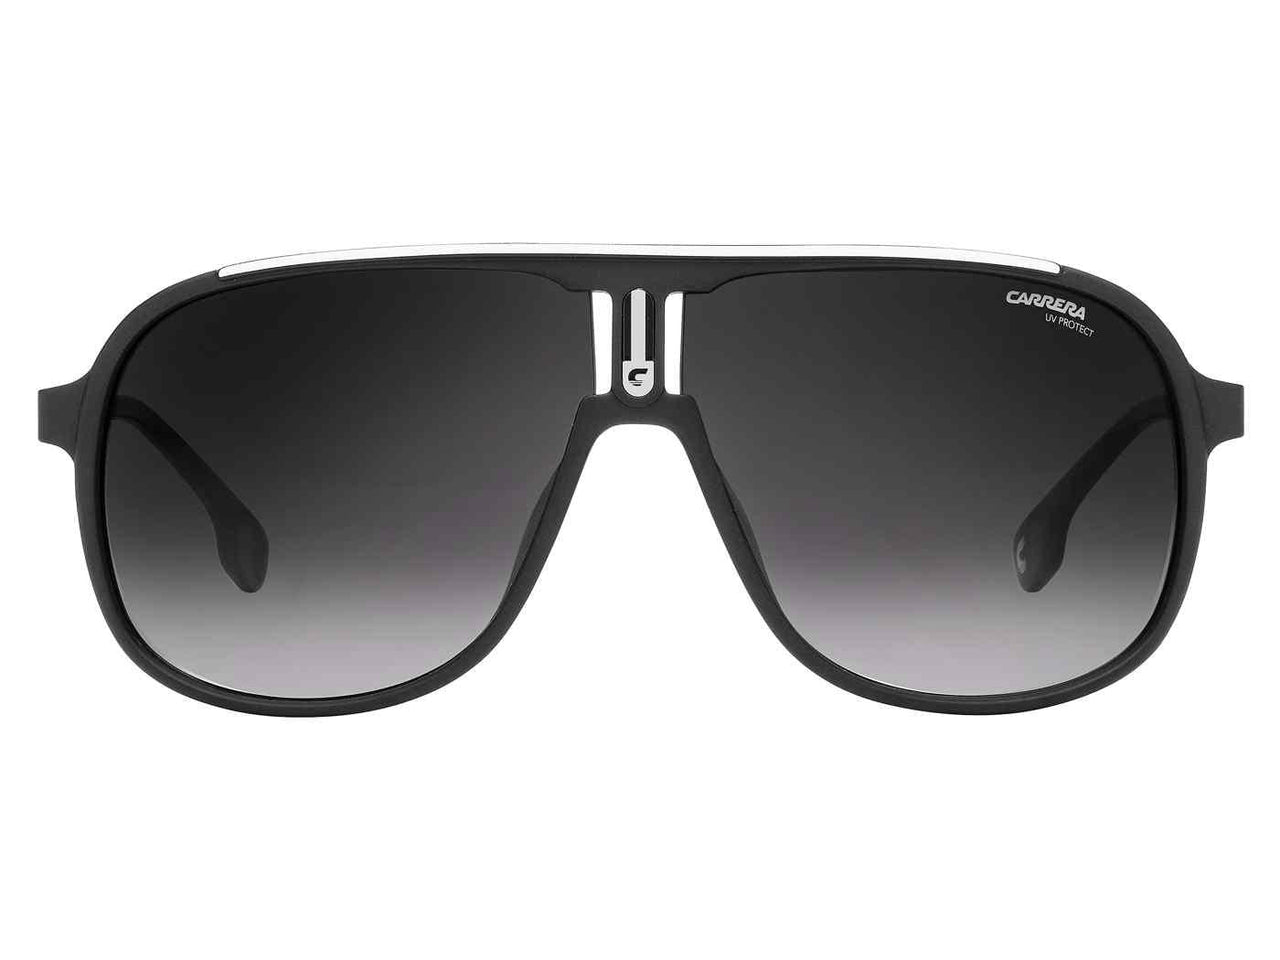 Carrera 1007 Sunglasses